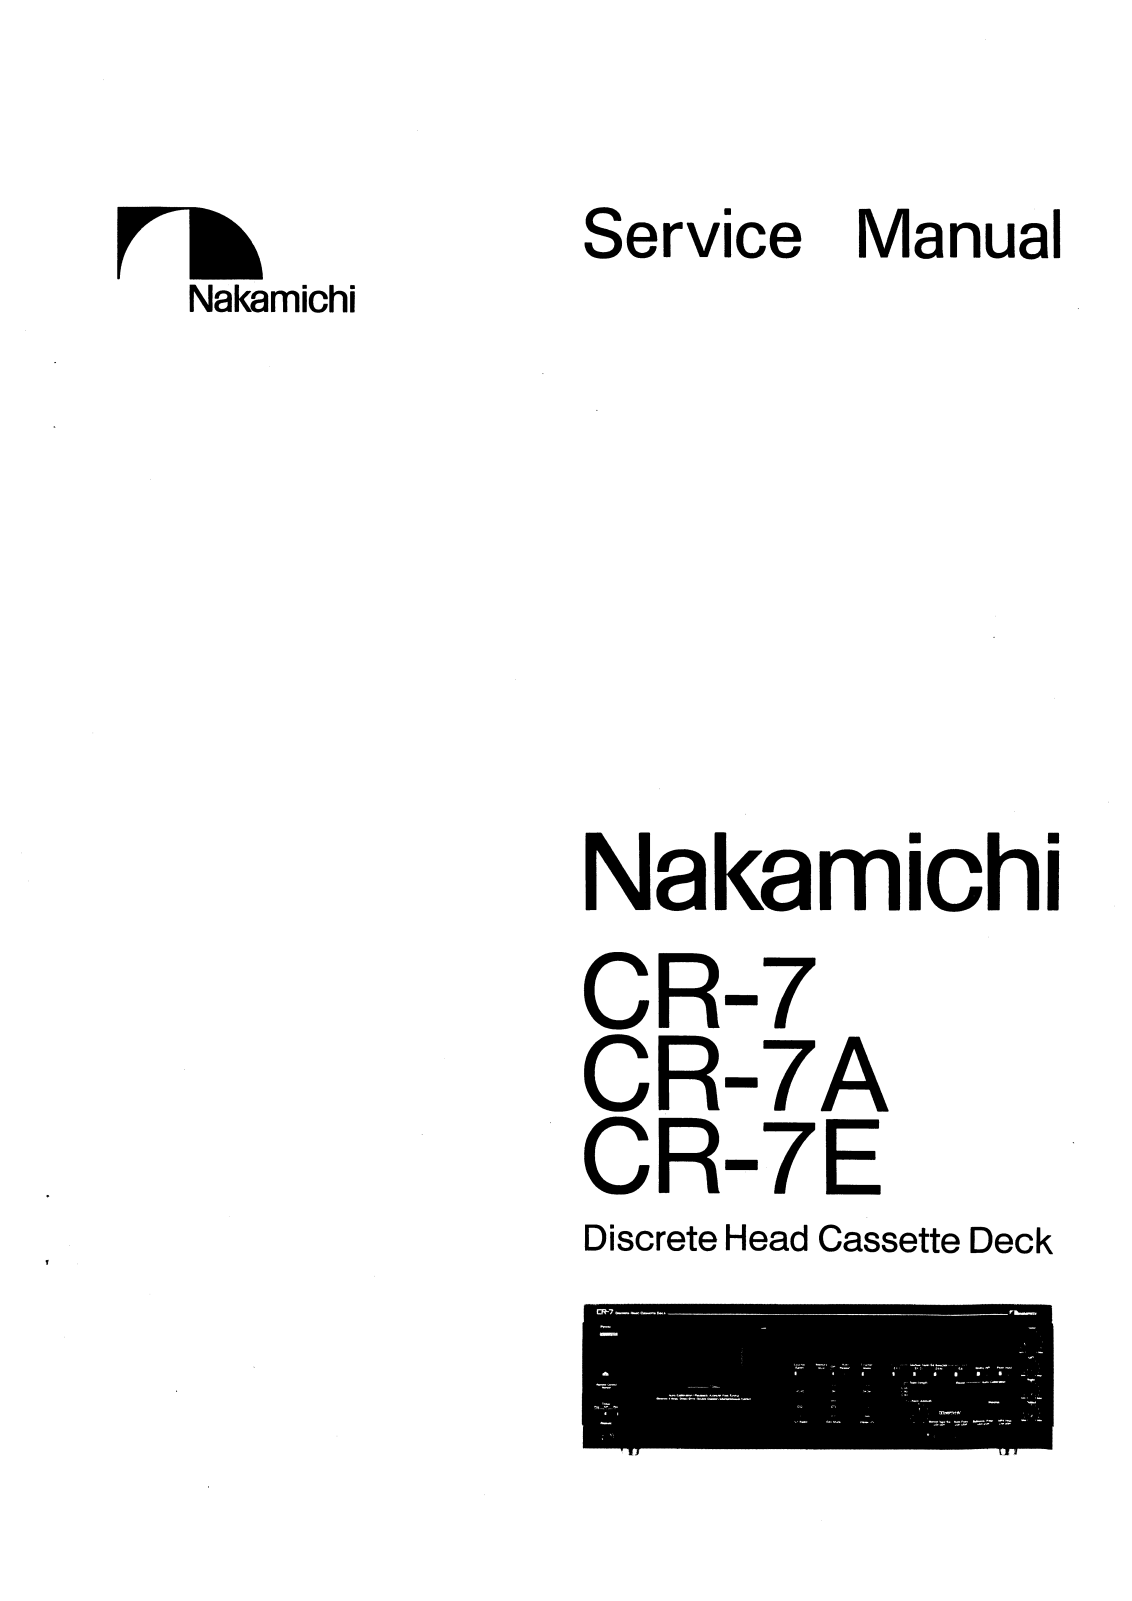 Nakamichi CR-7-E, CR-7-A, CR-7 Service Manual